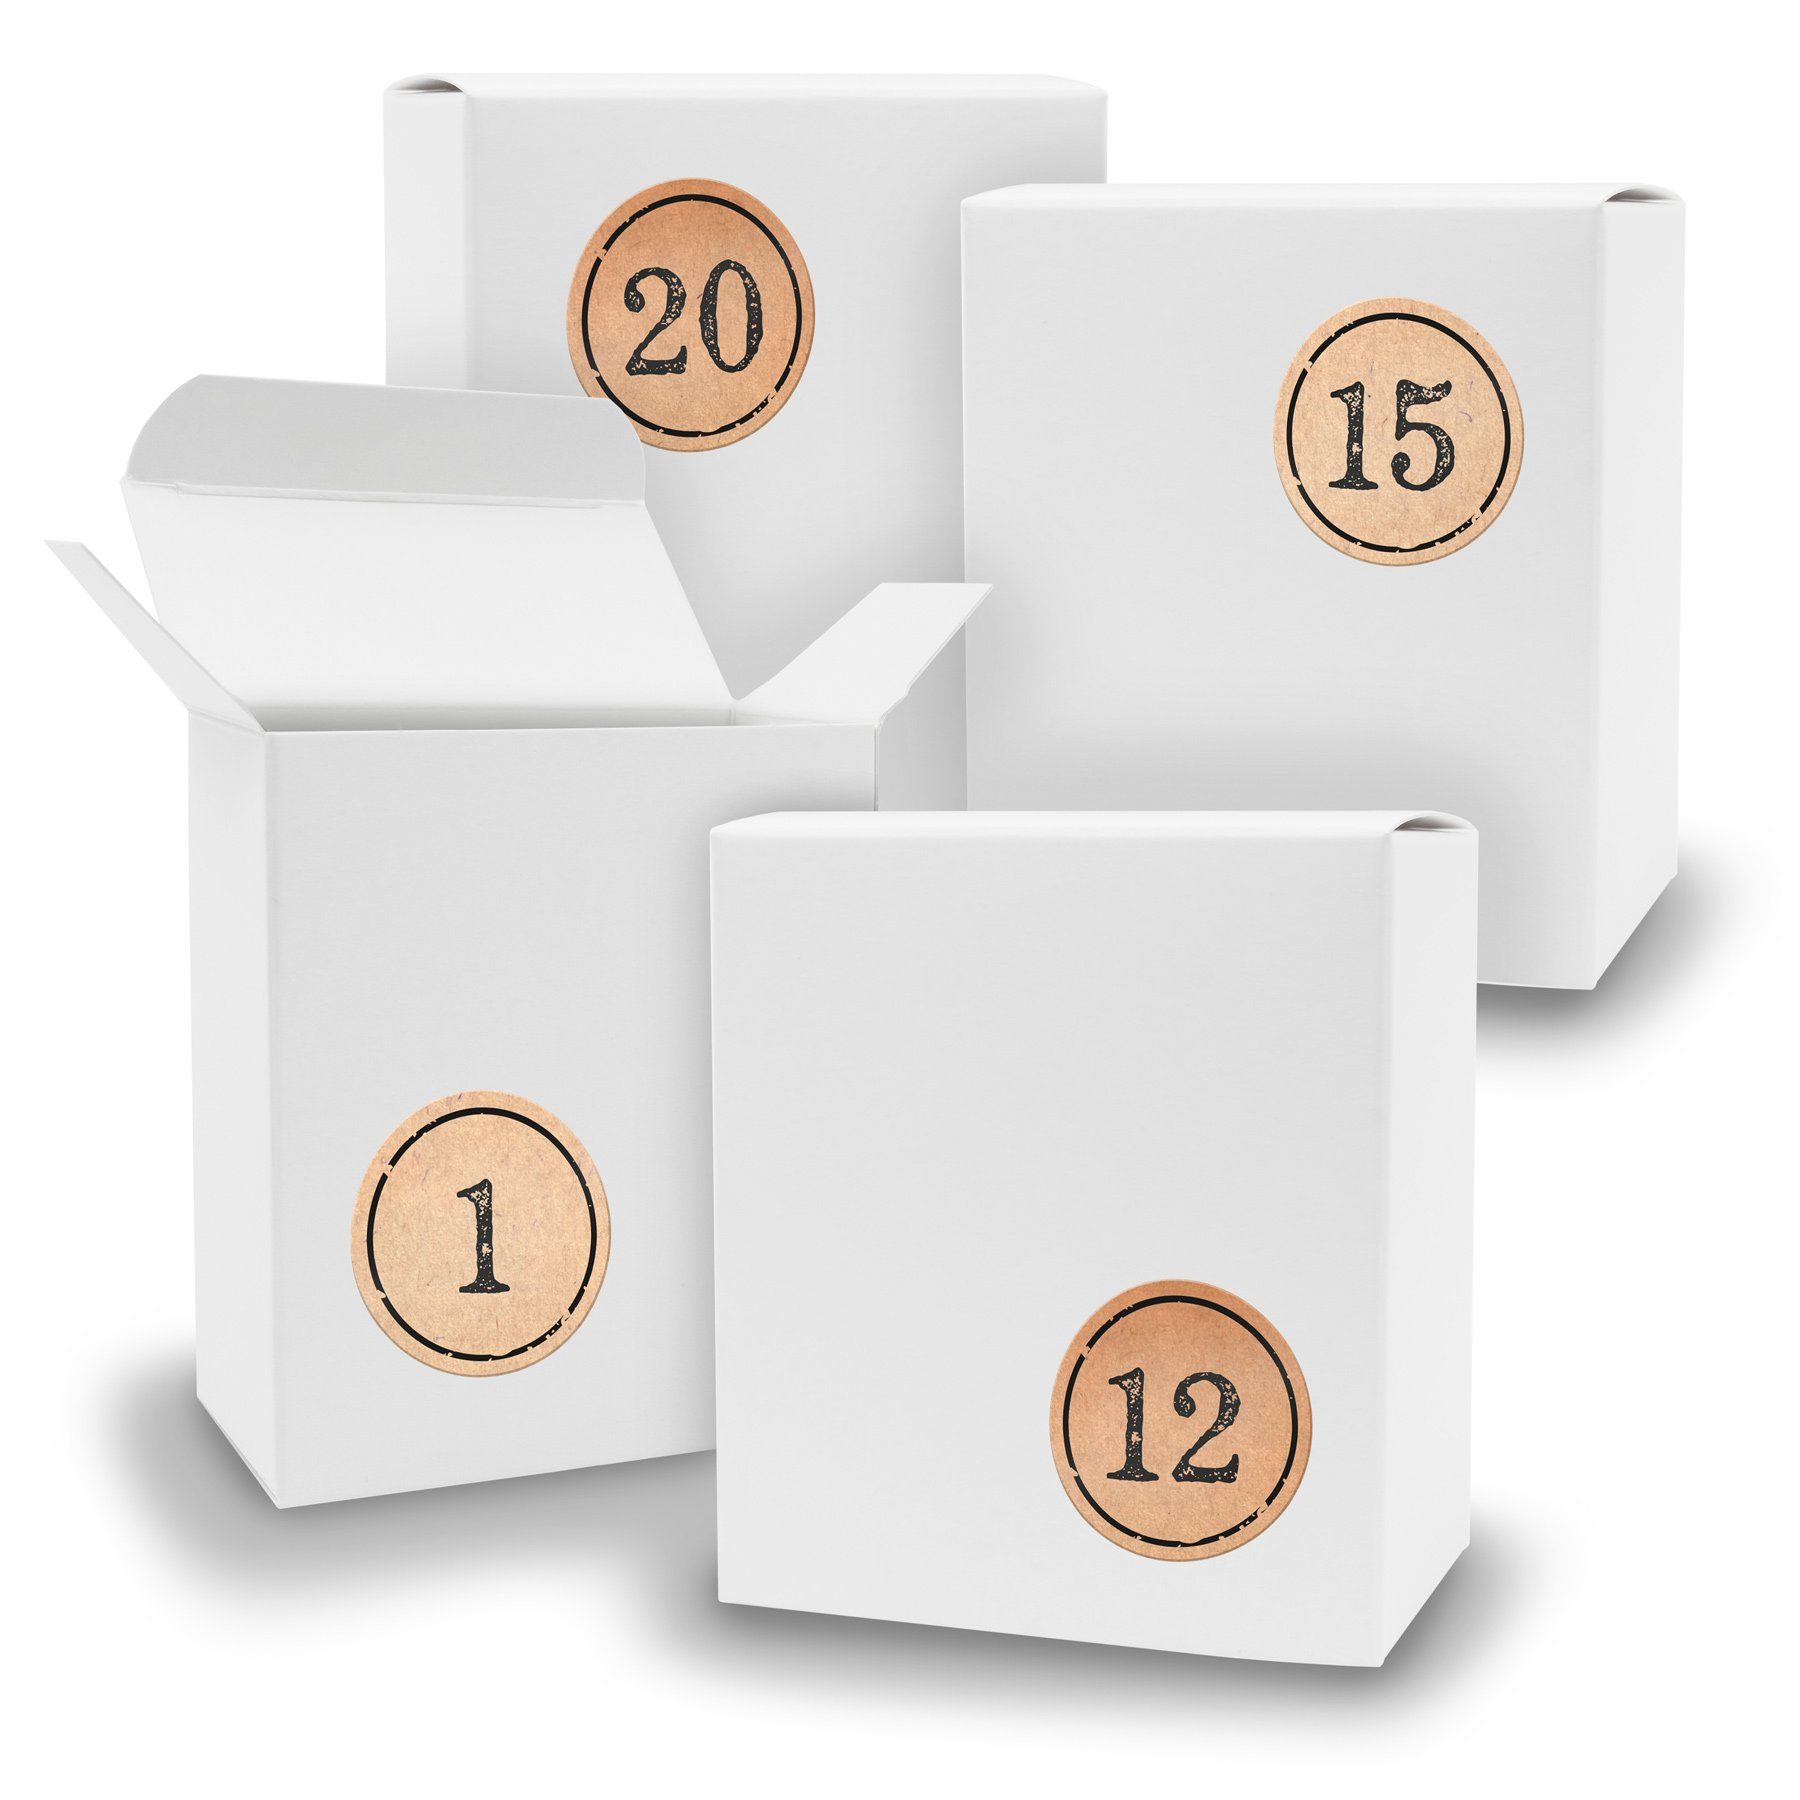 24x Quader Sticker itenga + WEISS zum befüllbarer Adventskalender Z11 V07 Füllen Adventskalender